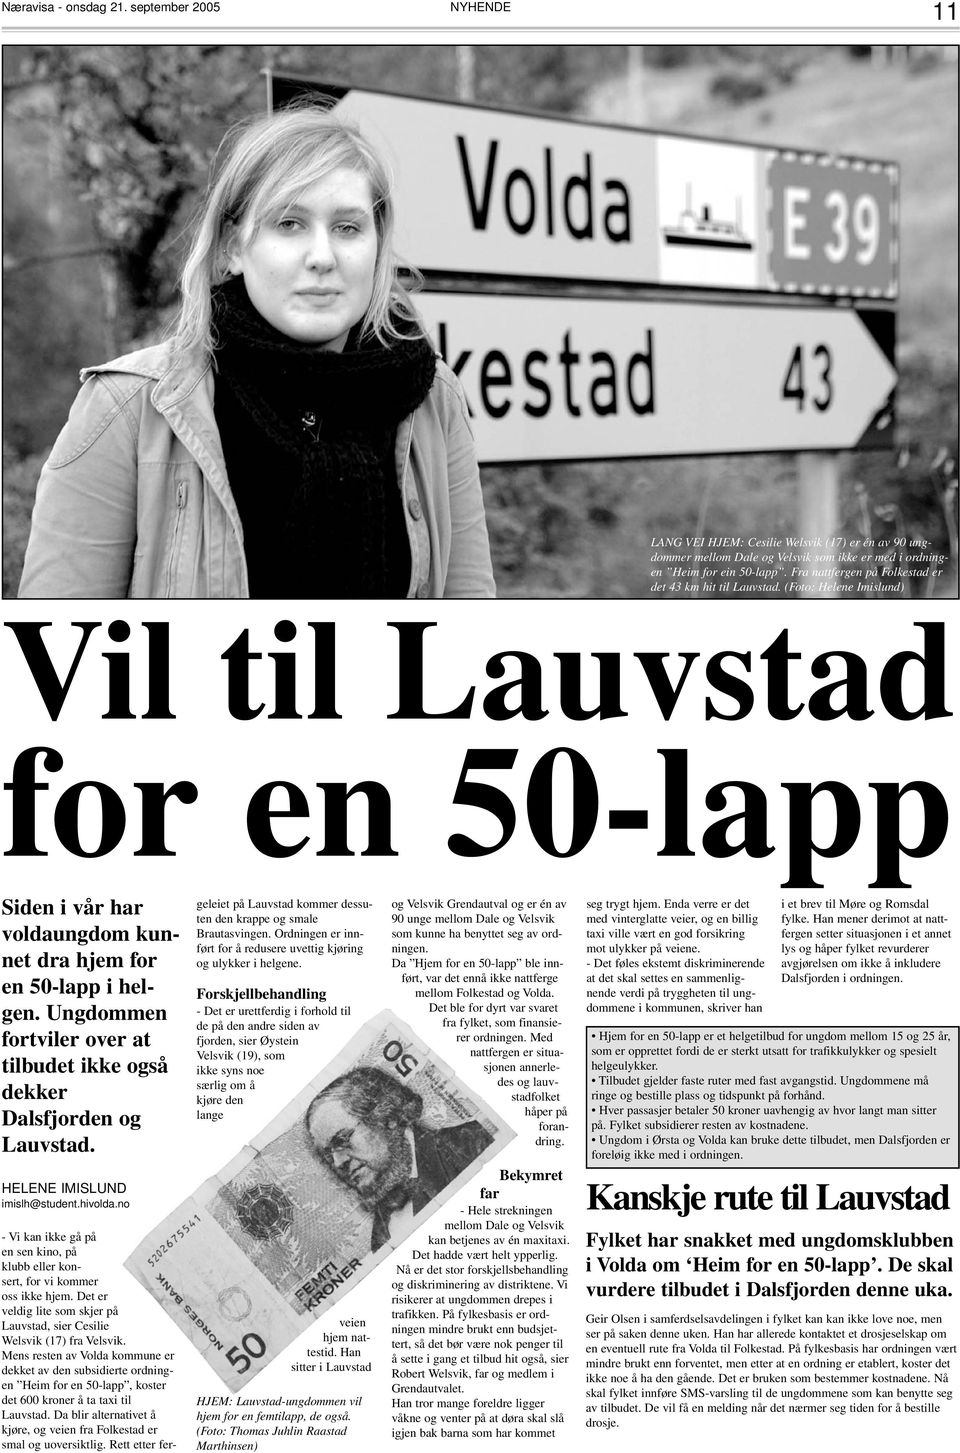 Ungdommen fortviler over at tilbudet ikke også dekker Dalsfjorden og Lauvstad. HELENE IMISLUND imislh@student.hivolda.